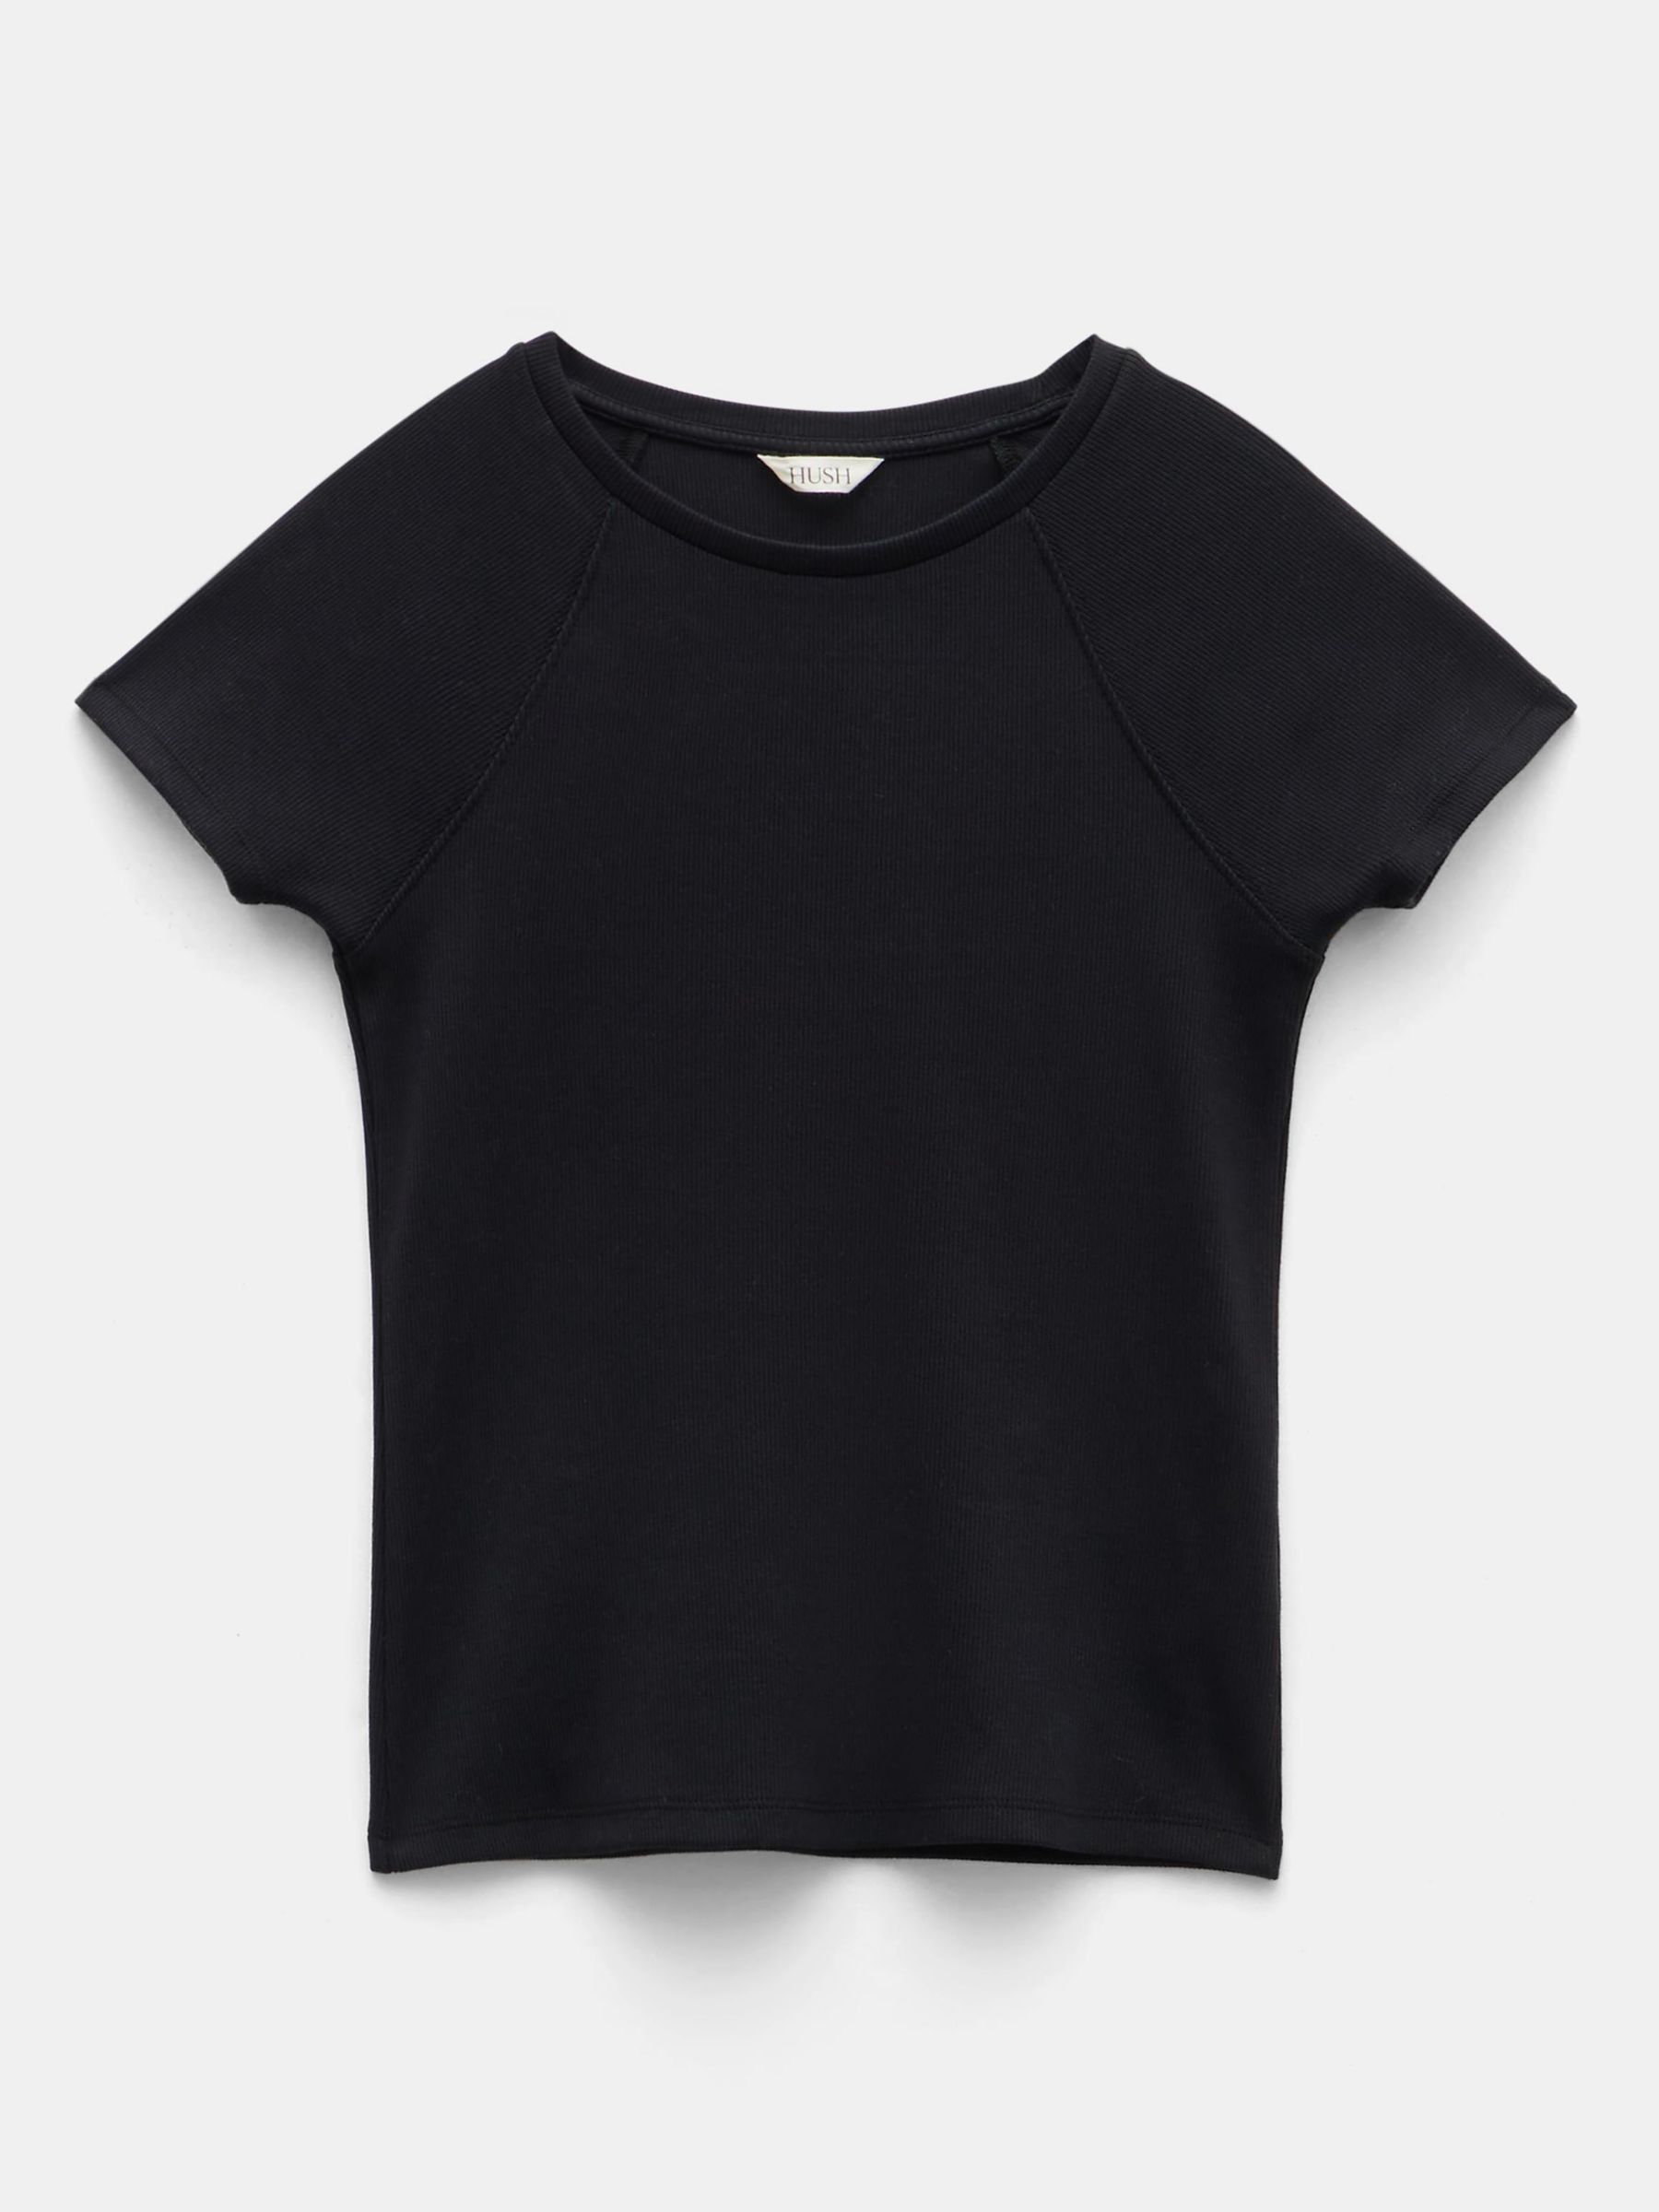 Buy HUSH Deven Ribbed Baby Fit T-Shirt, Black Online at johnlewis.com